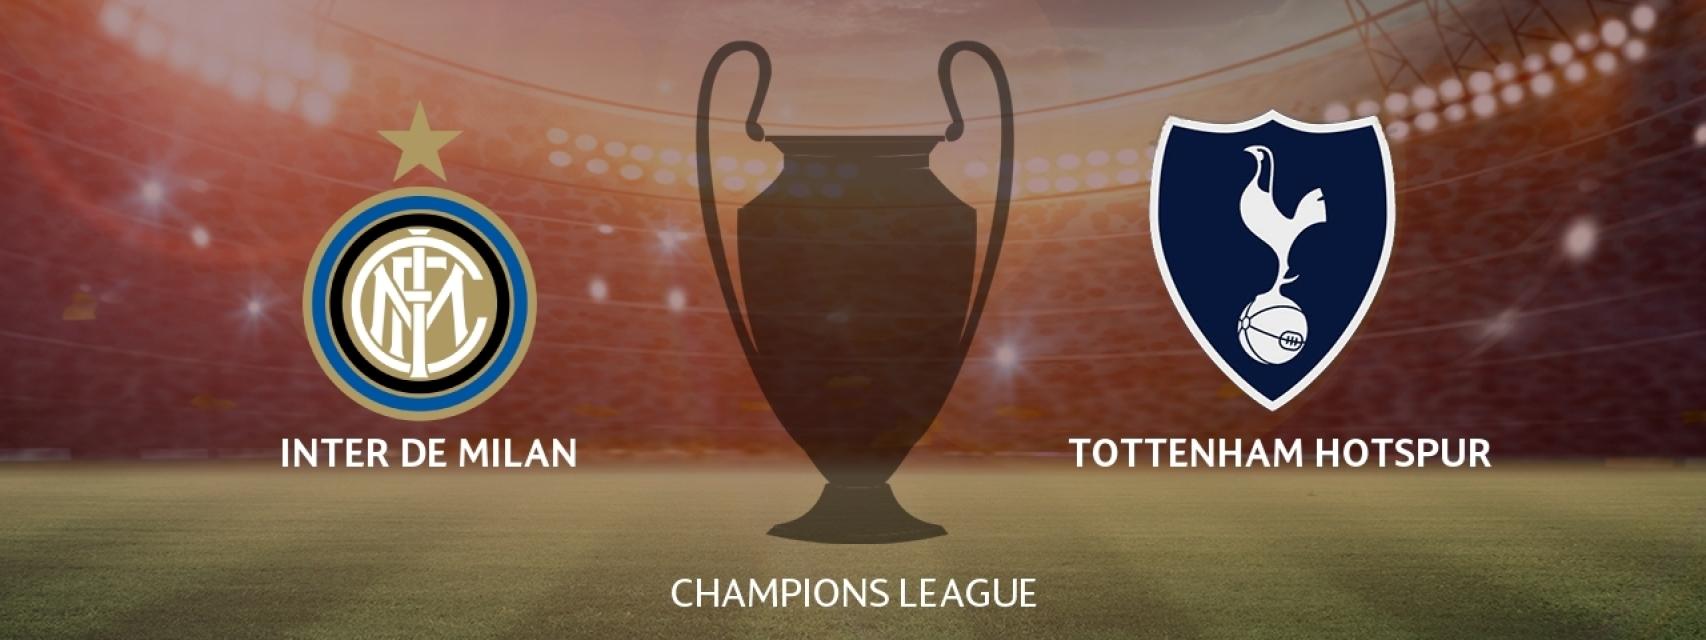 Inter de Milan - Tottenham Hotspur, partido de Champions League